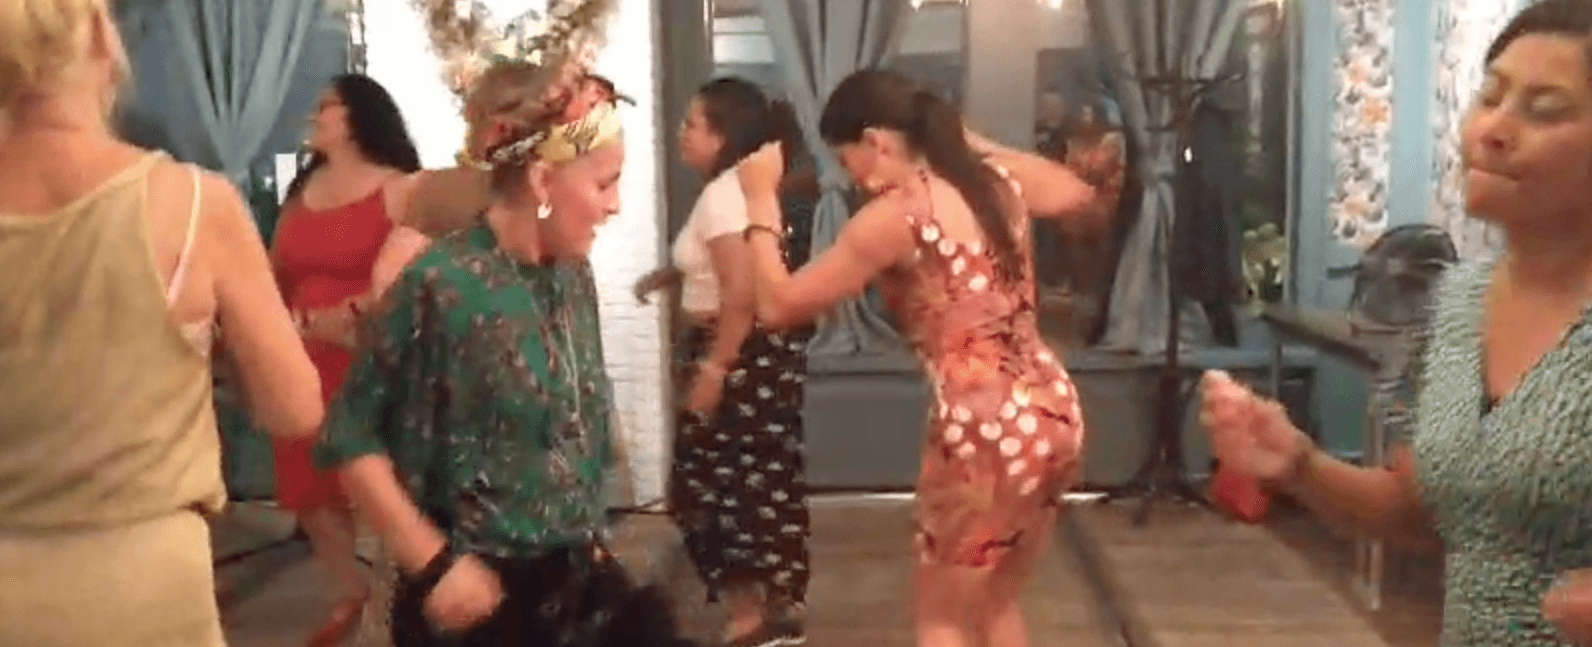 Spaanse Avond met Salsa, Bachata en Kizomba dansen in Den Bosch